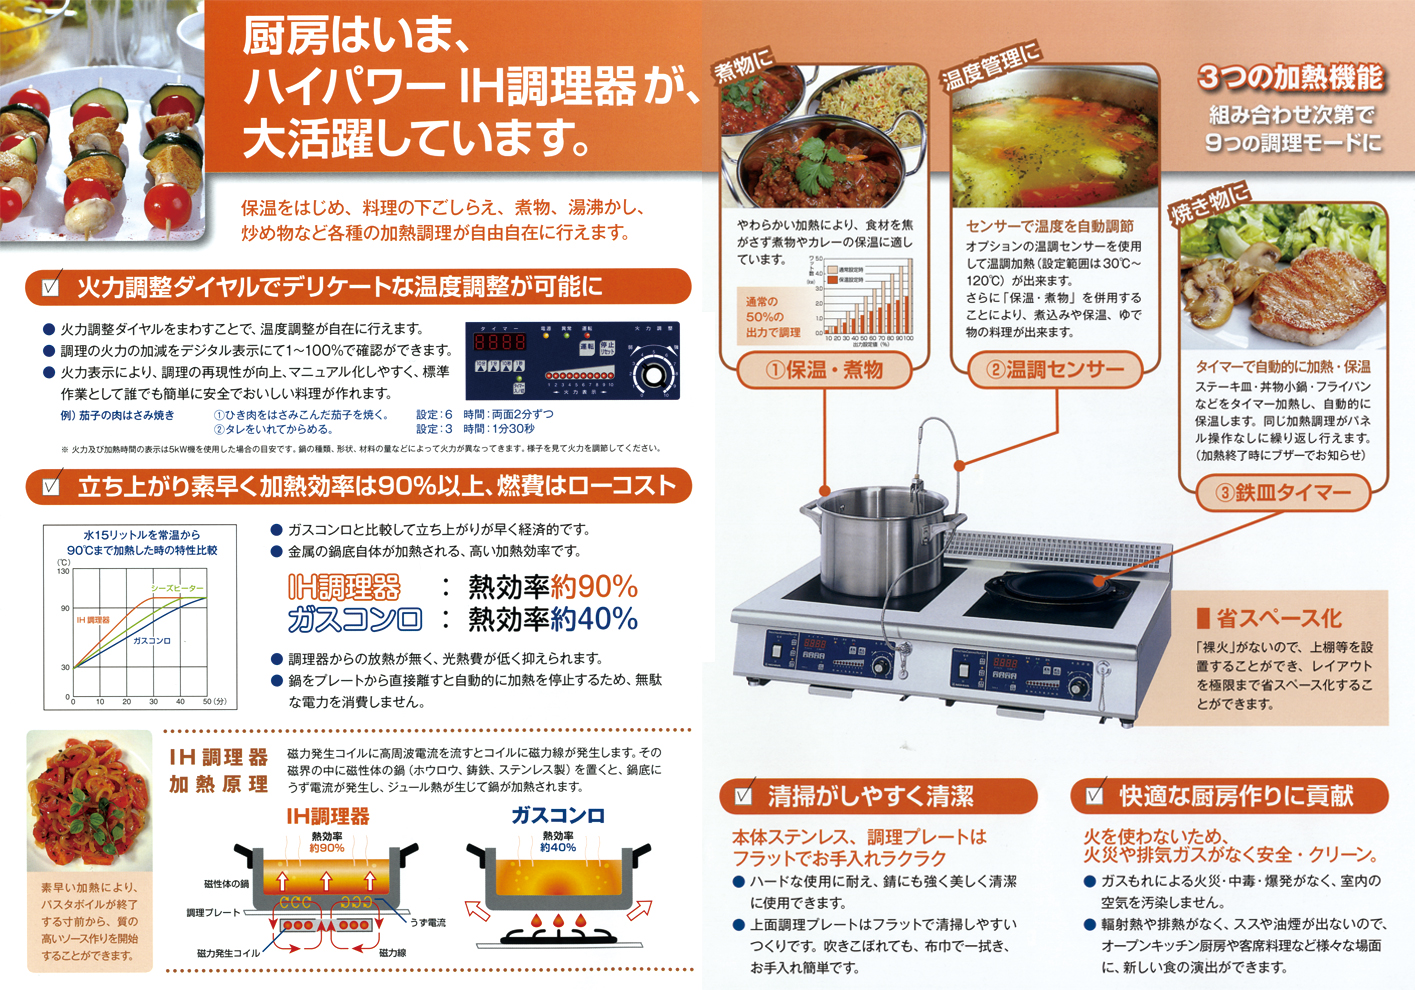 IHコンロ(電磁調理器) 卓上タイプ(2連)幅900×奥行600×高さ250(mm) MIR-1035TA-N ニチワ |  業務用厨房機器のリサイクルマート